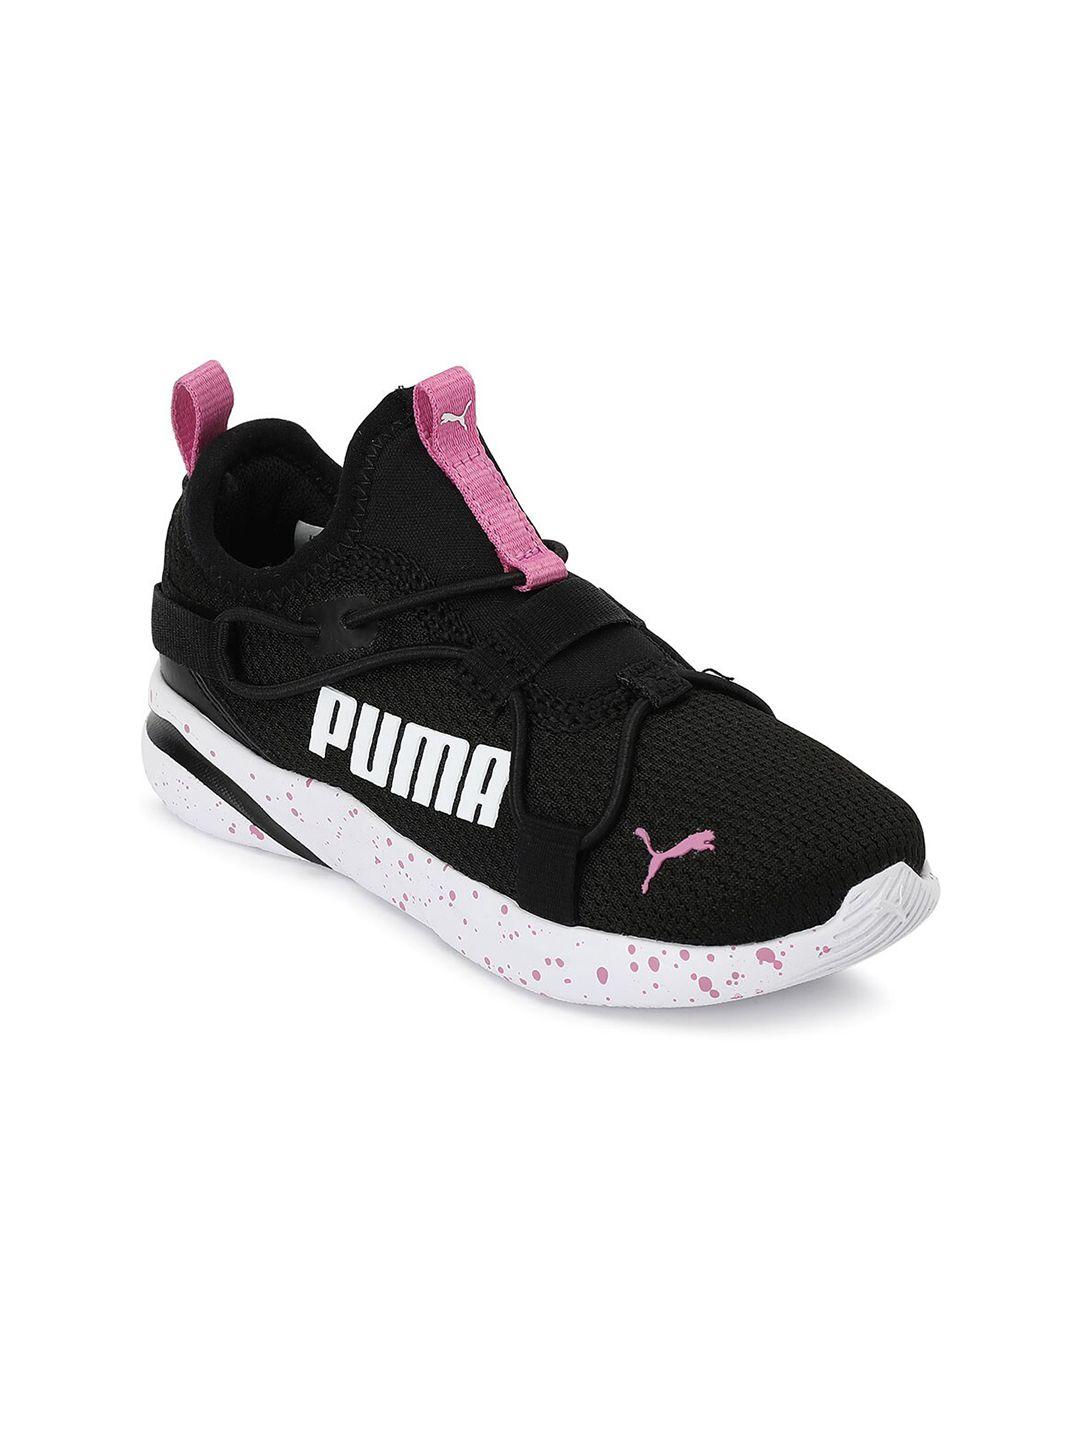 puma unisex kids black rift speckle running shoes